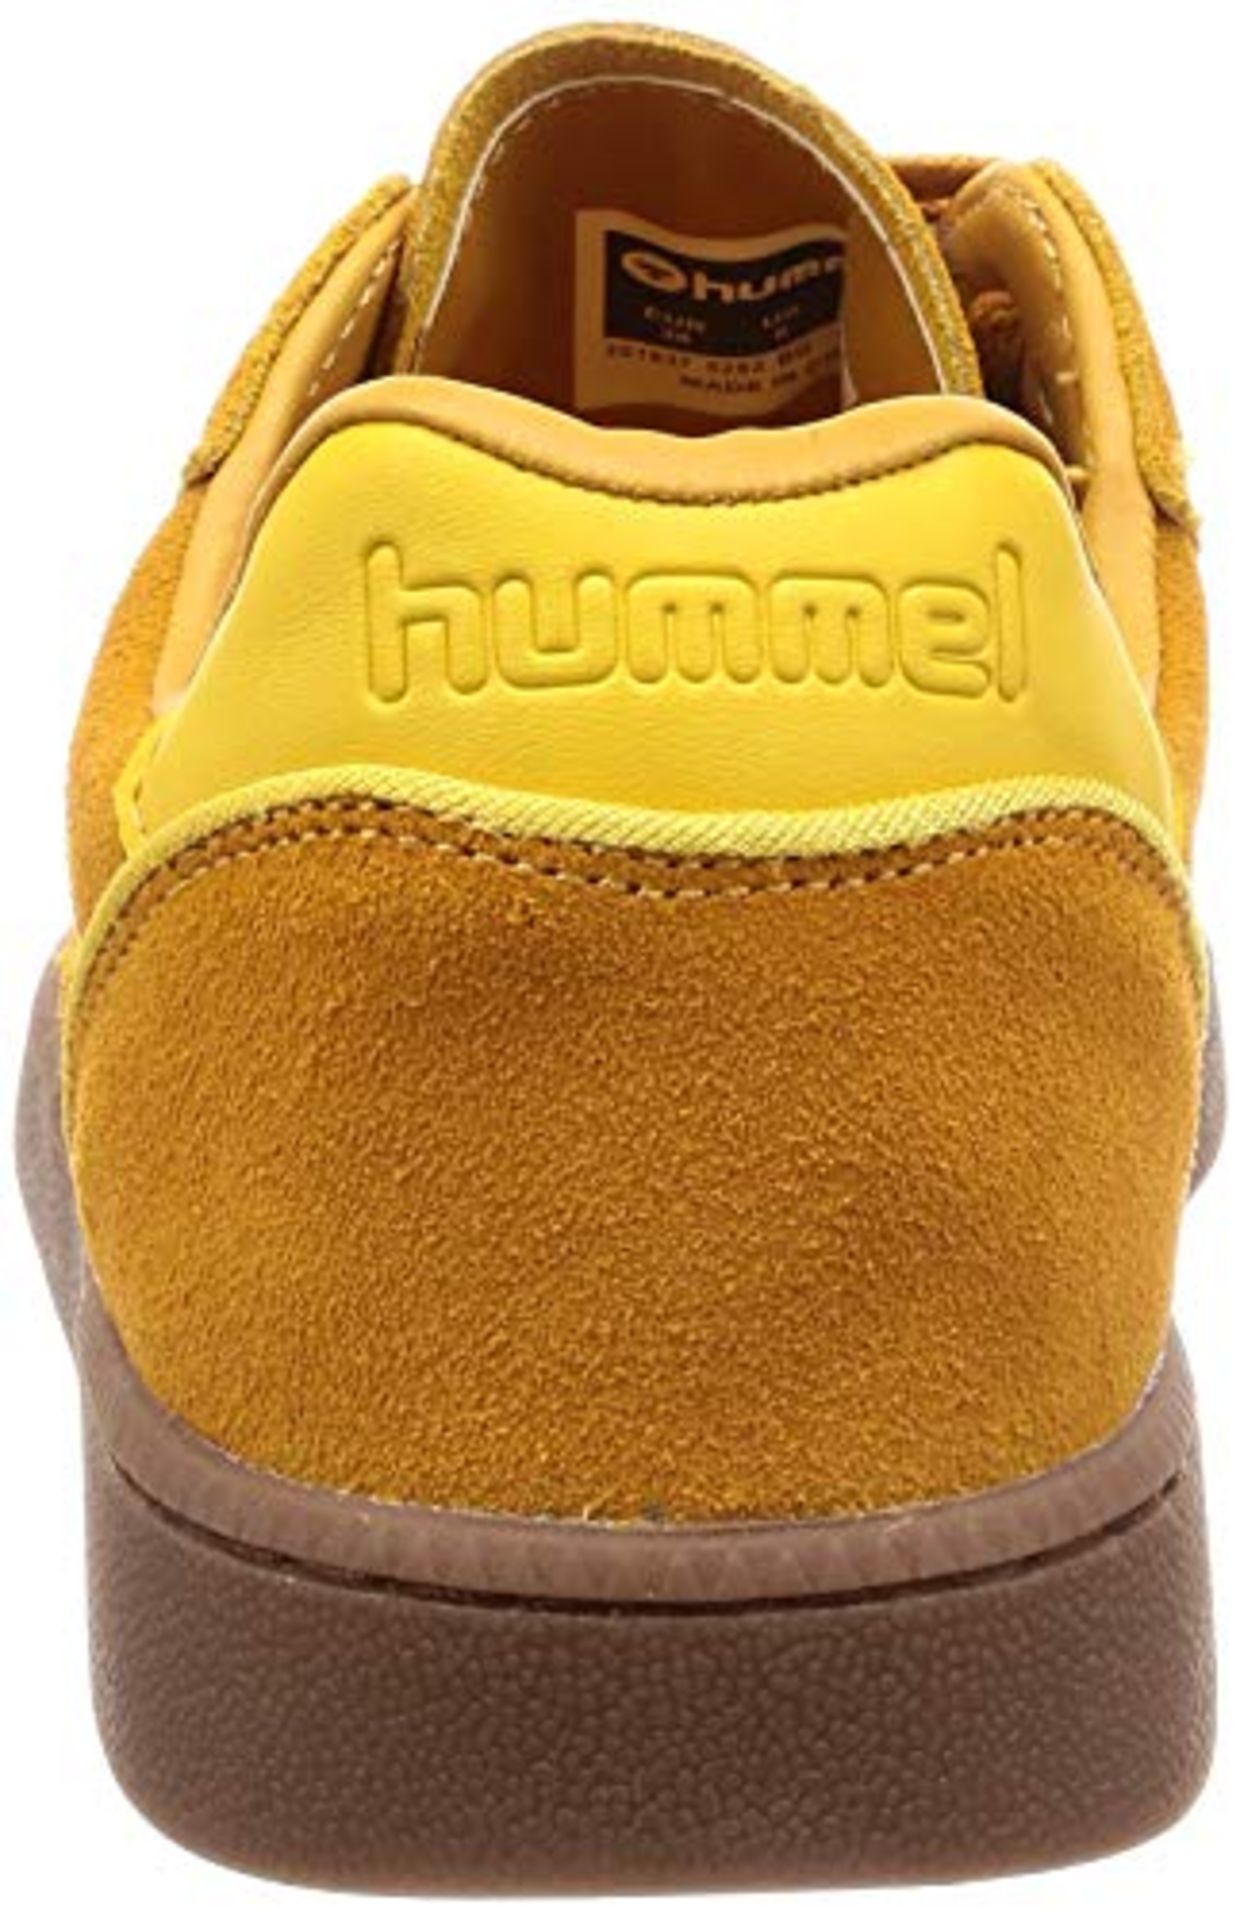 1 x Hummel Hb Team - Sunflower - Men's Lifestyle Shoes, Men, HM201937, 40 Size: 6.5 UK | EAN: 57004 - Image 2 of 8